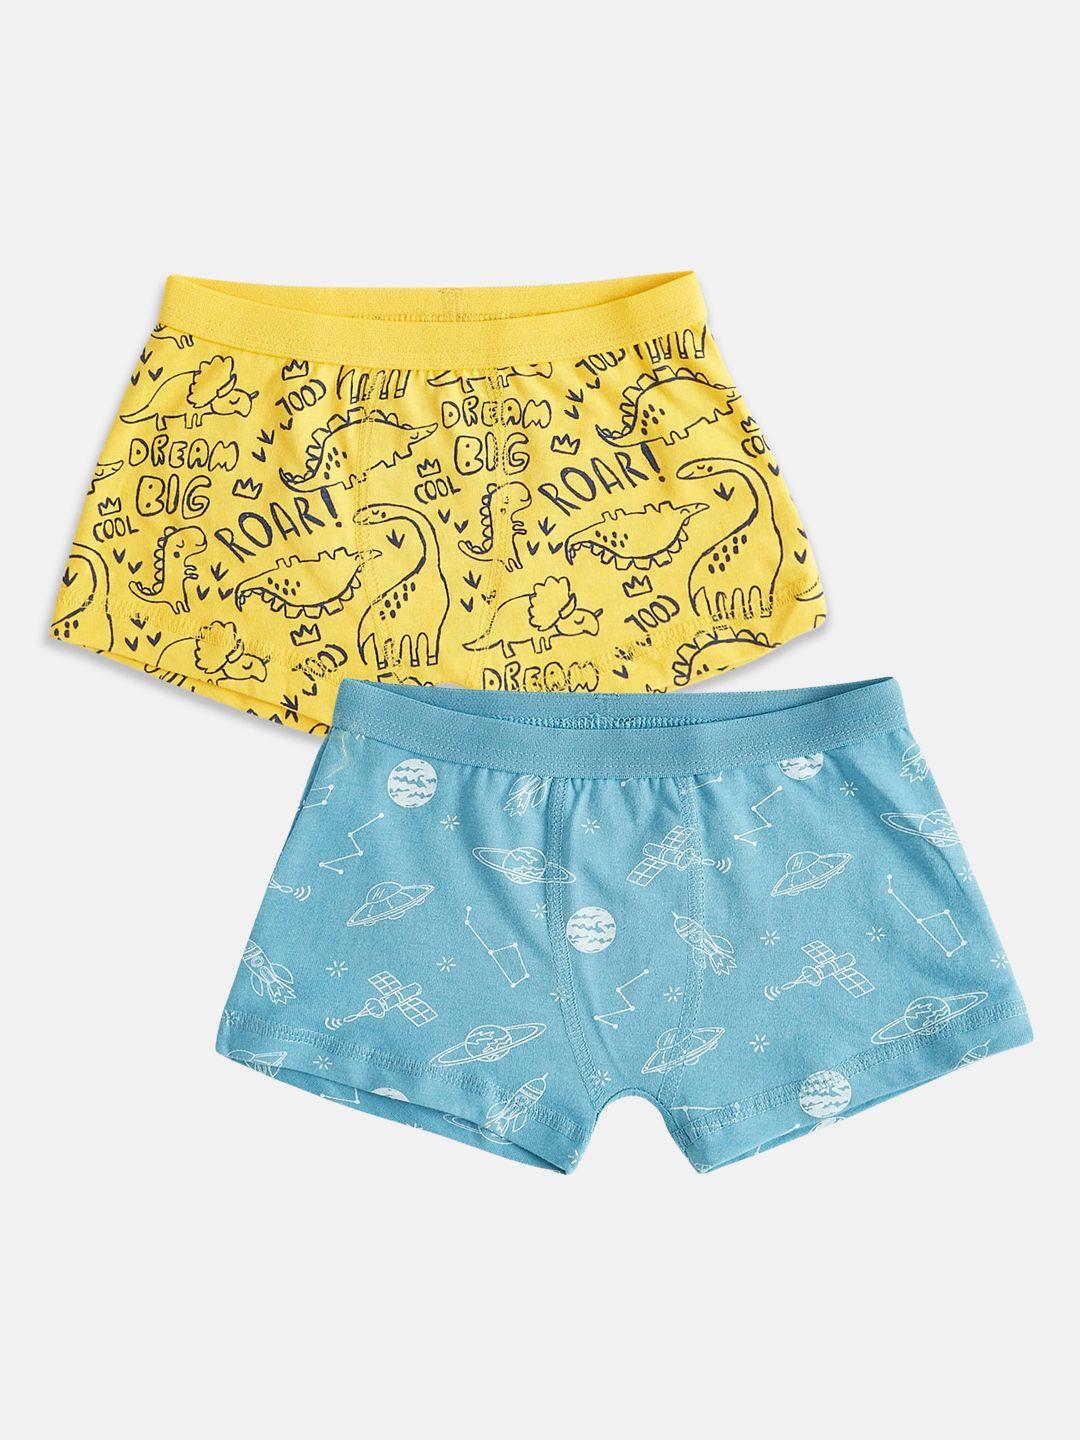 pantaloons junior boys pack of 2 printed cotton trunks 8905685685257